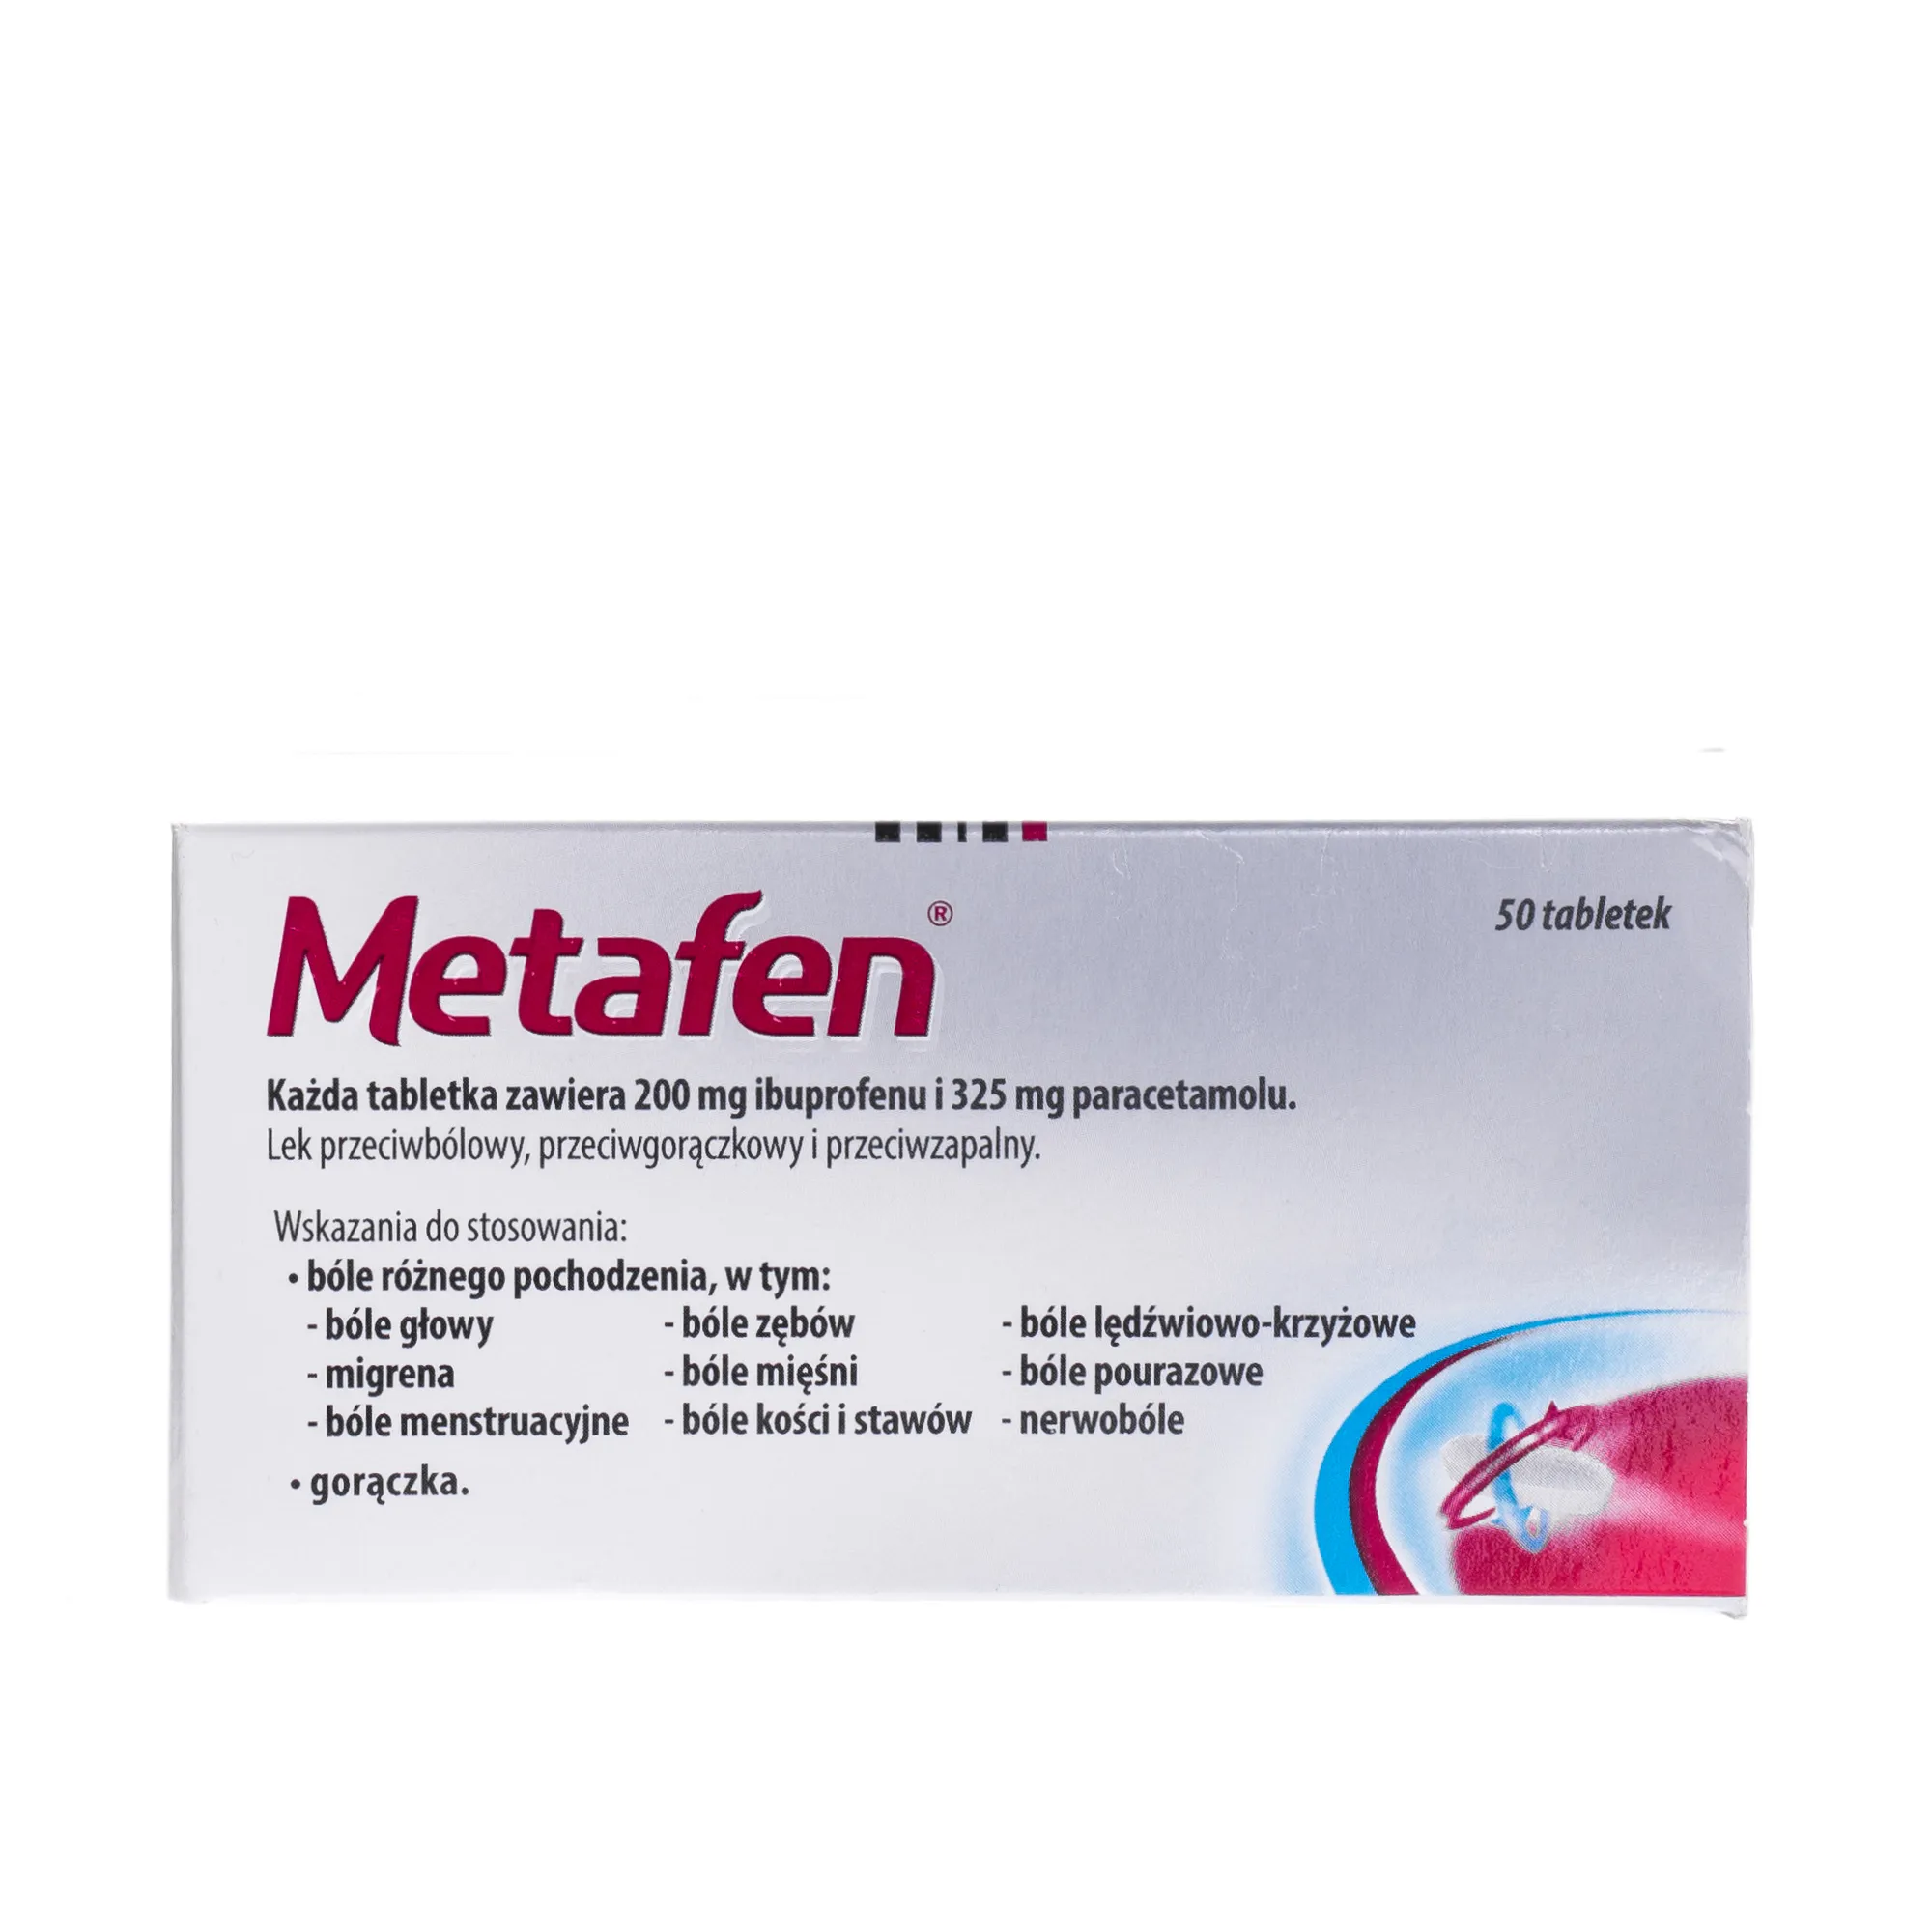 Metafen, lek przeciwbólowy, 50 tabletek 